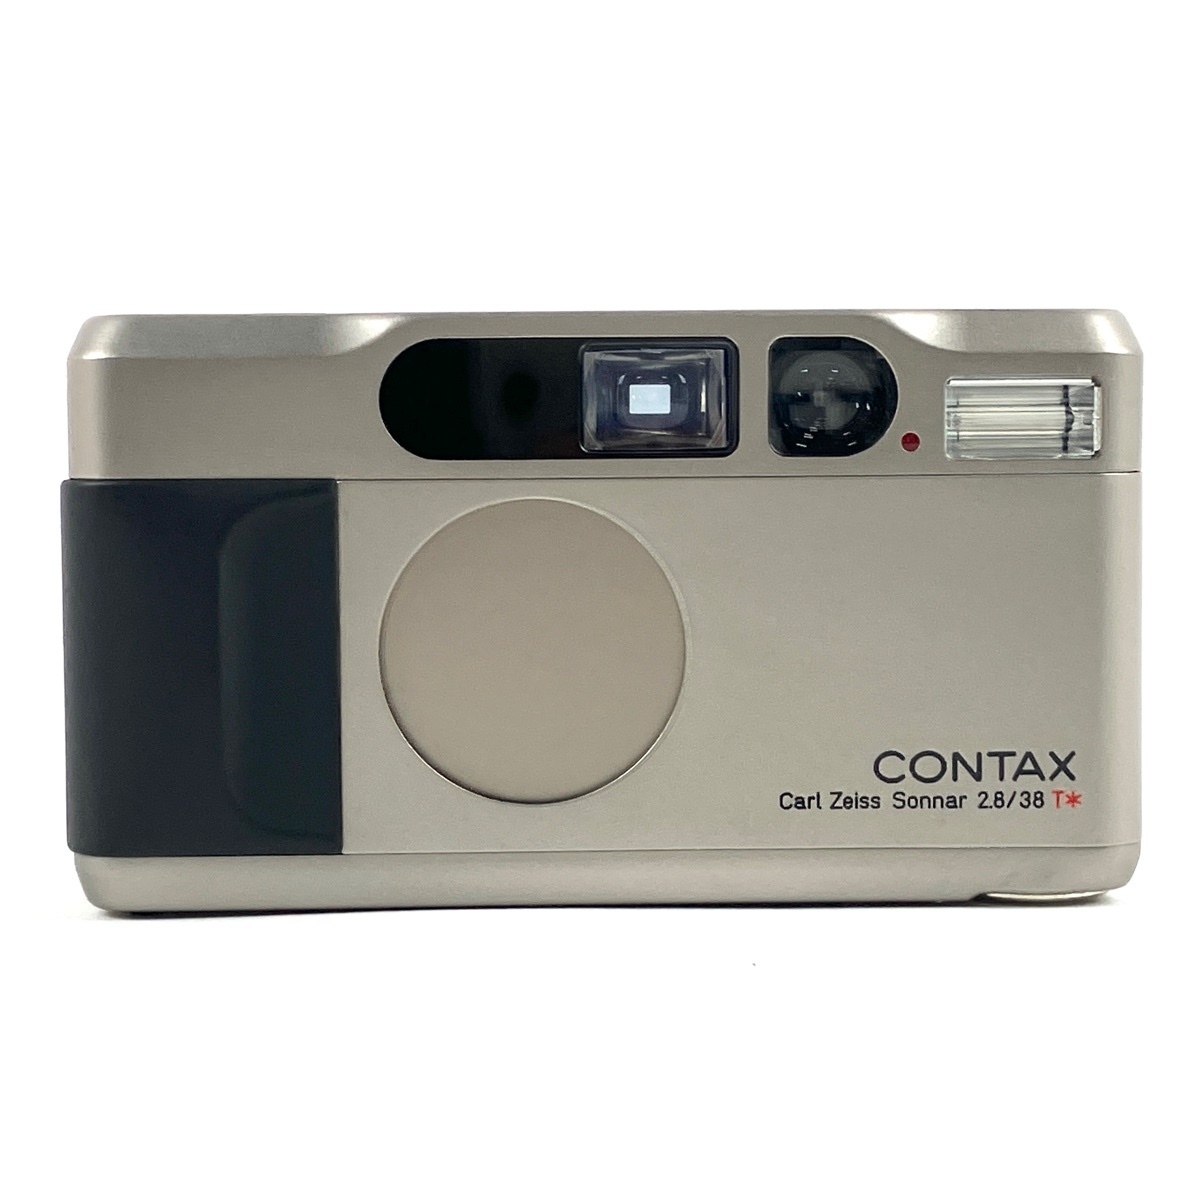  Contax CONTAX T2 titanium серебряный плёнка компакт-камера [ б/у ]